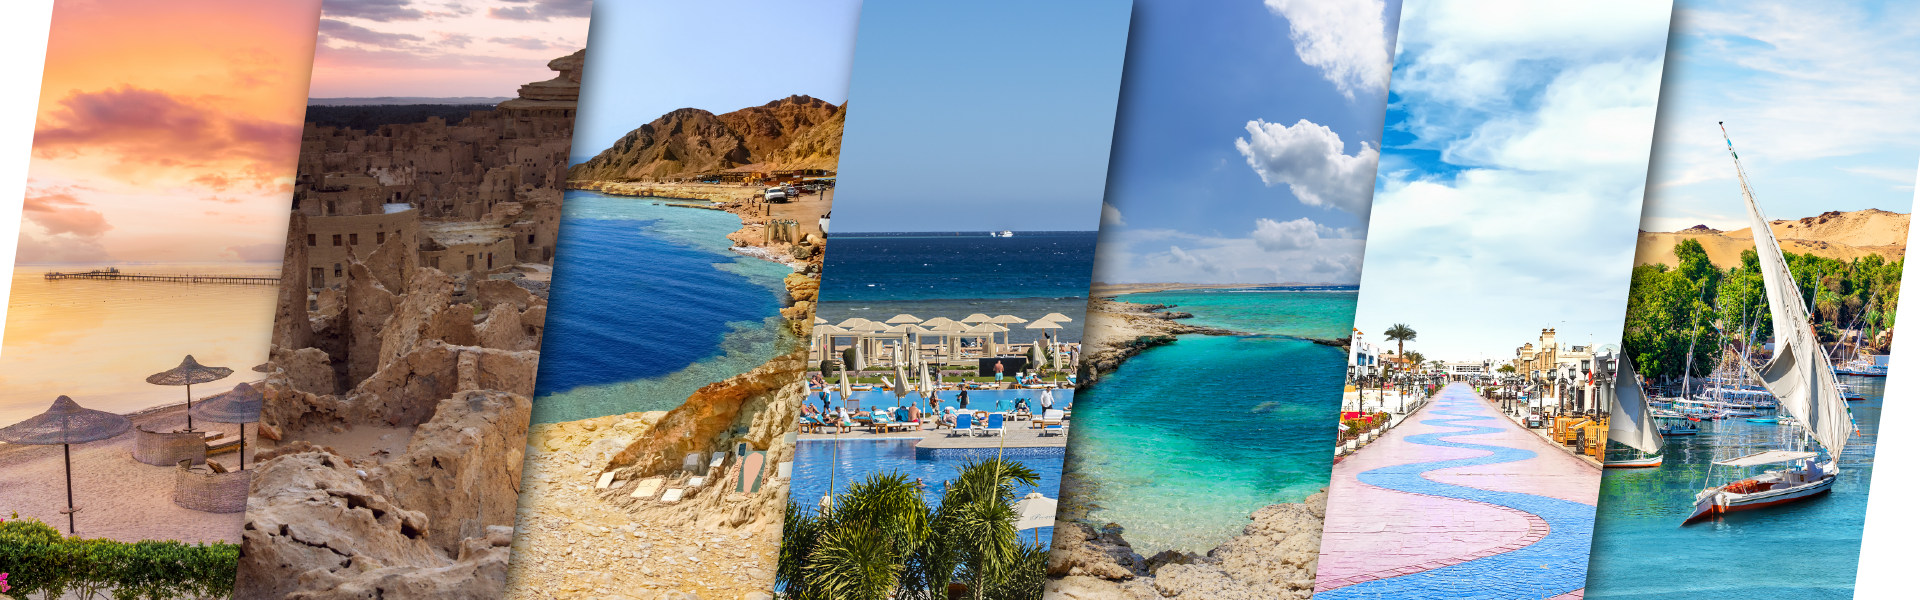 Top 7 Destinations to Enjoy a Winter Getaway in Egypt